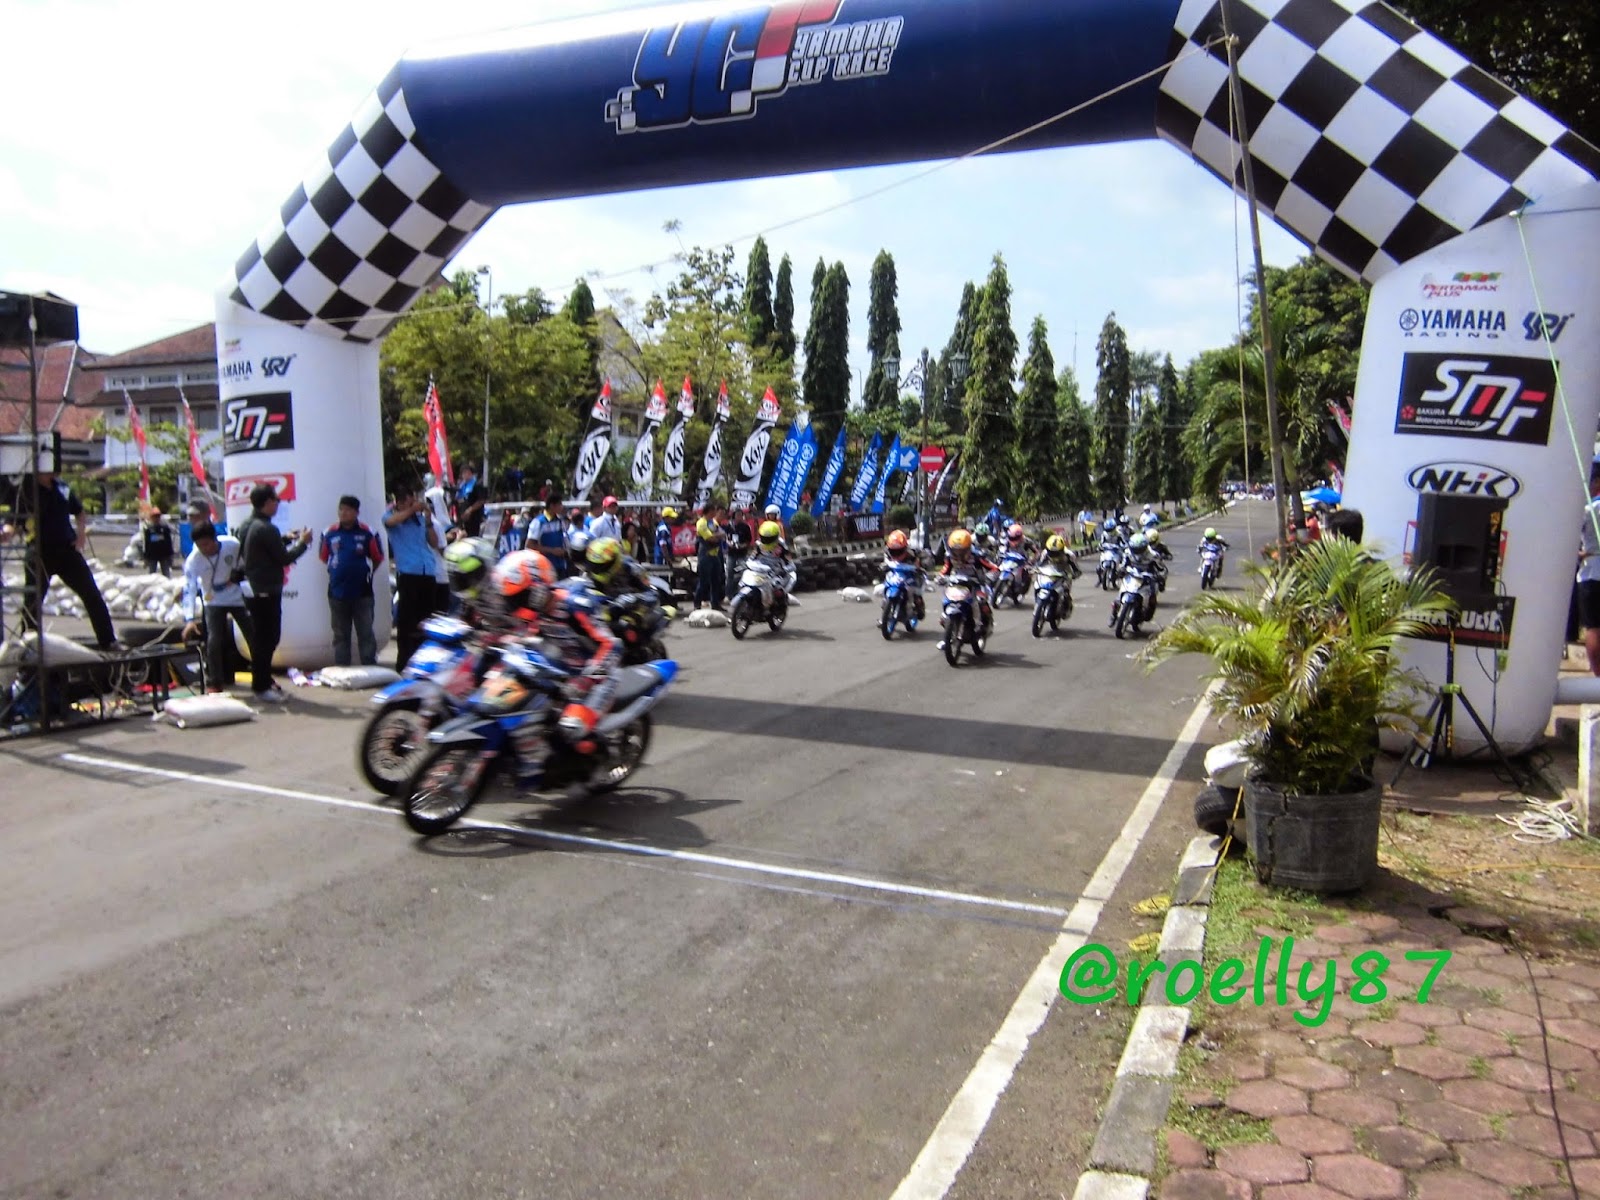 Roelly87com Yamaha Cup Race 2013 Seri Pekalongan Dominasi